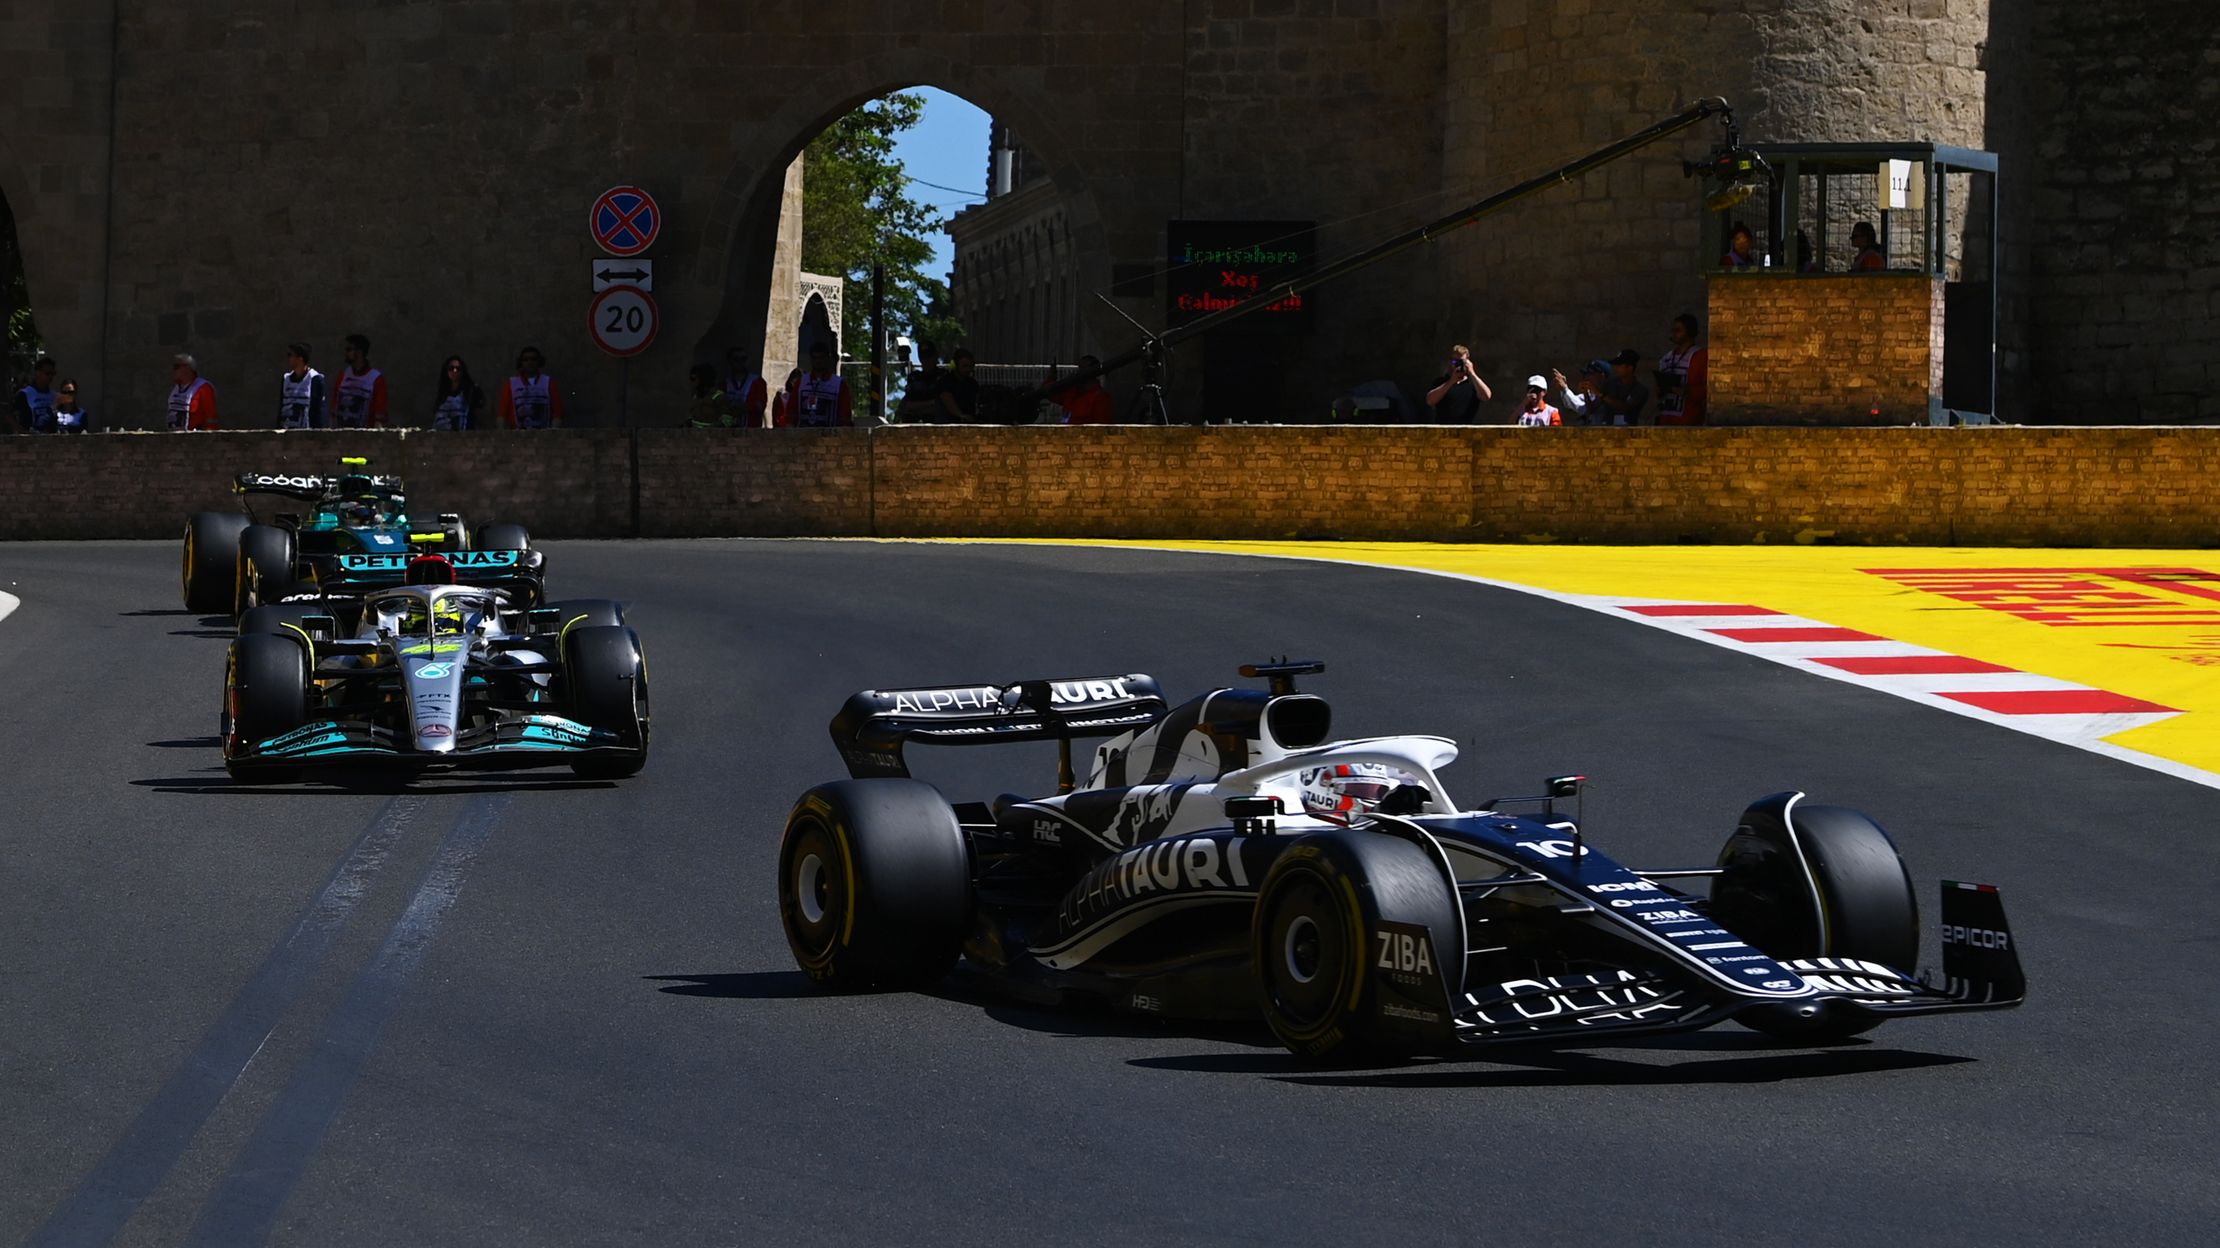 Pierre Gasly leads Lewis Hamilton during the Azerbaijan Grand Prix.